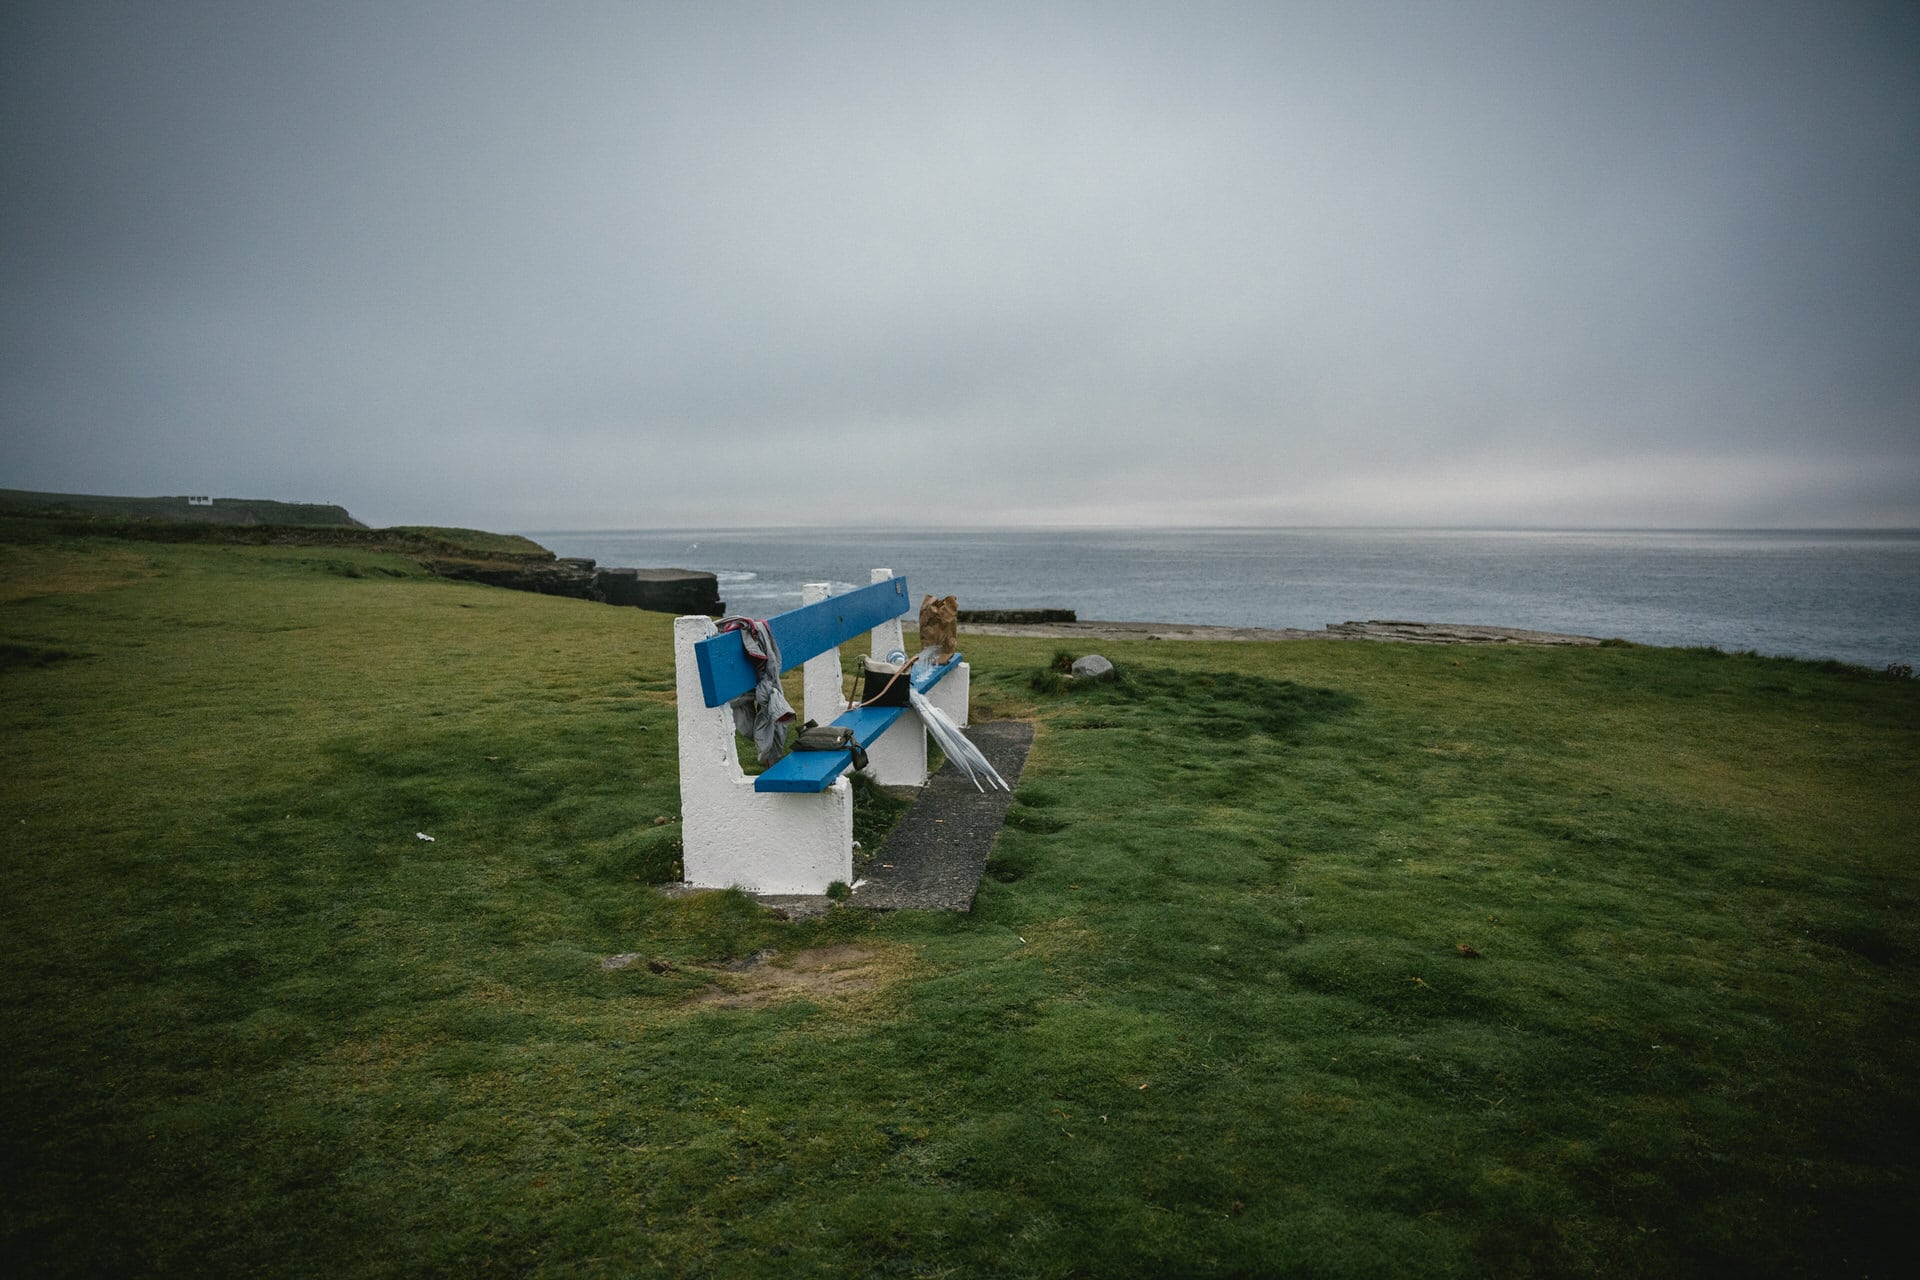 The misty Irish coast: A backdrop for their heartfelt vows.